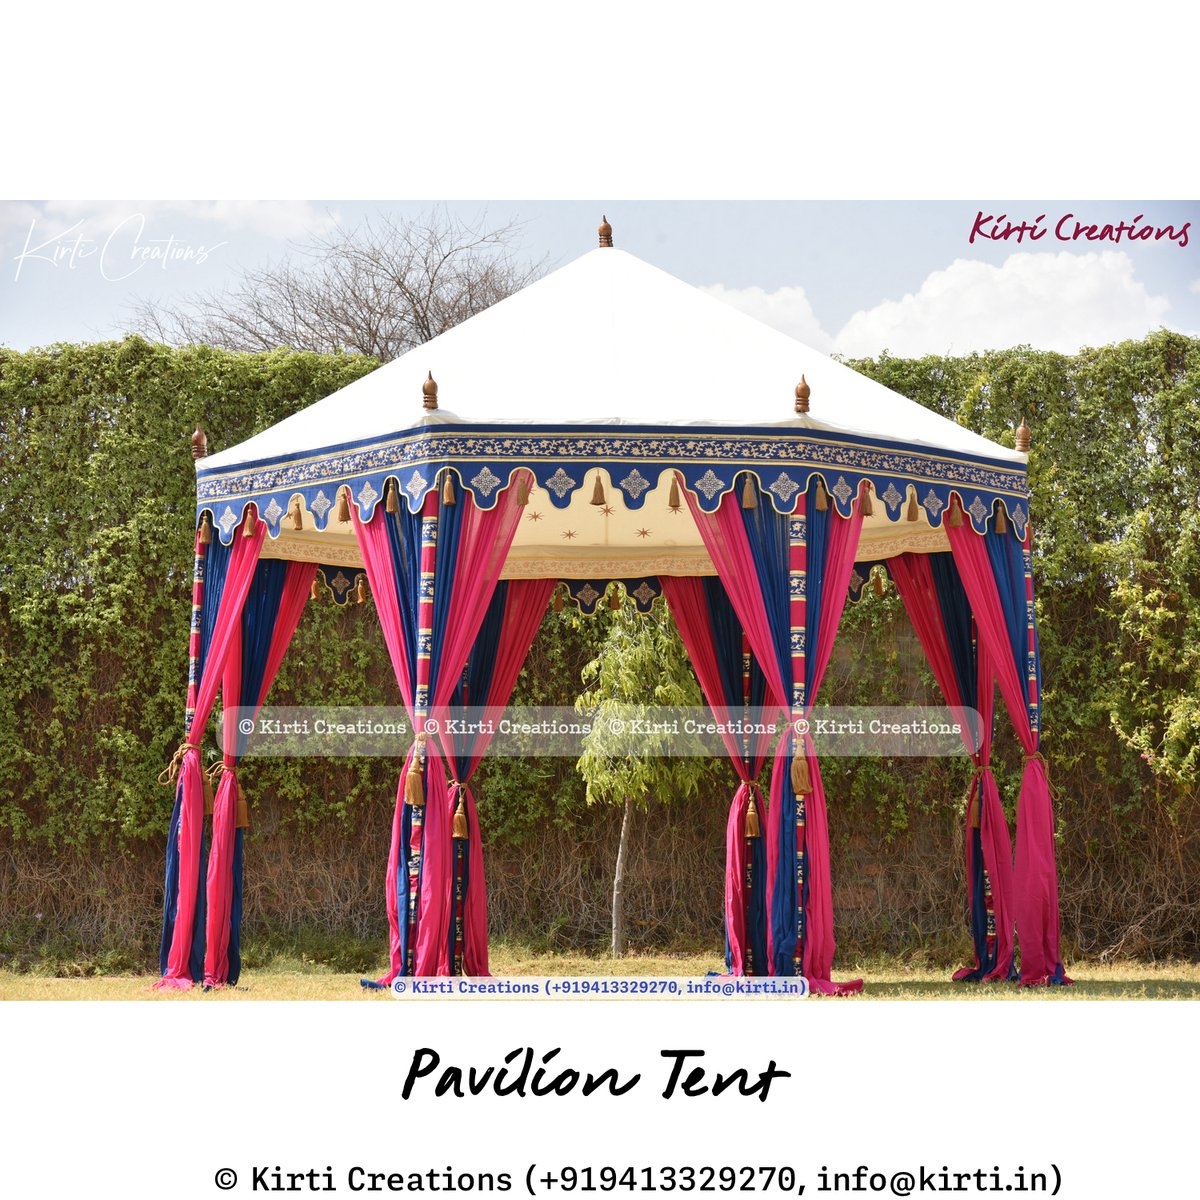 Lavish Pavilion Tent
.
#weddingtent #weddingtents #weddingplanner #weddingdesigner #weddingcompany #indianwedding #tentedwedding #destinationwedding #instawedding #luxurywedding
.
.
https://weddingtent.com0